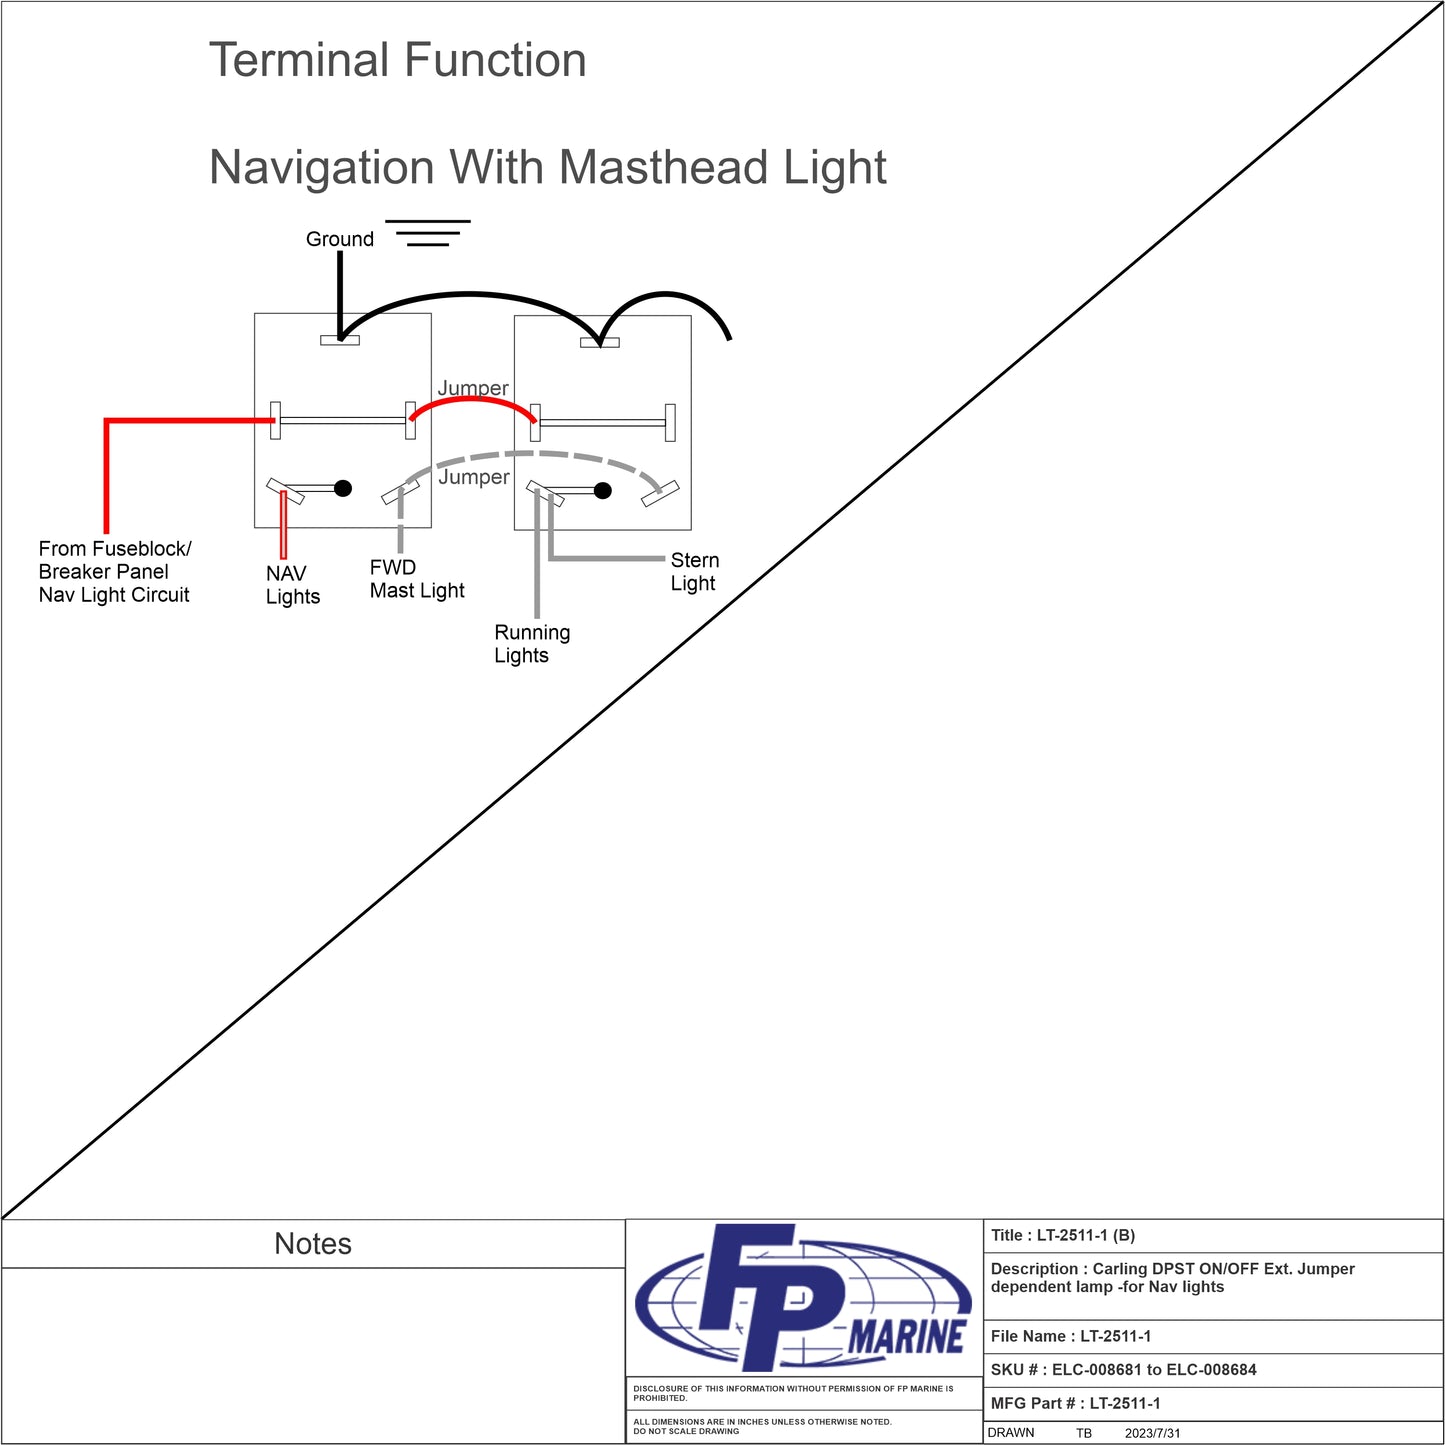 LT-2511-1, Carling DPST ON/OFF  Ext. Jumper dependent lamp -for Nav lights